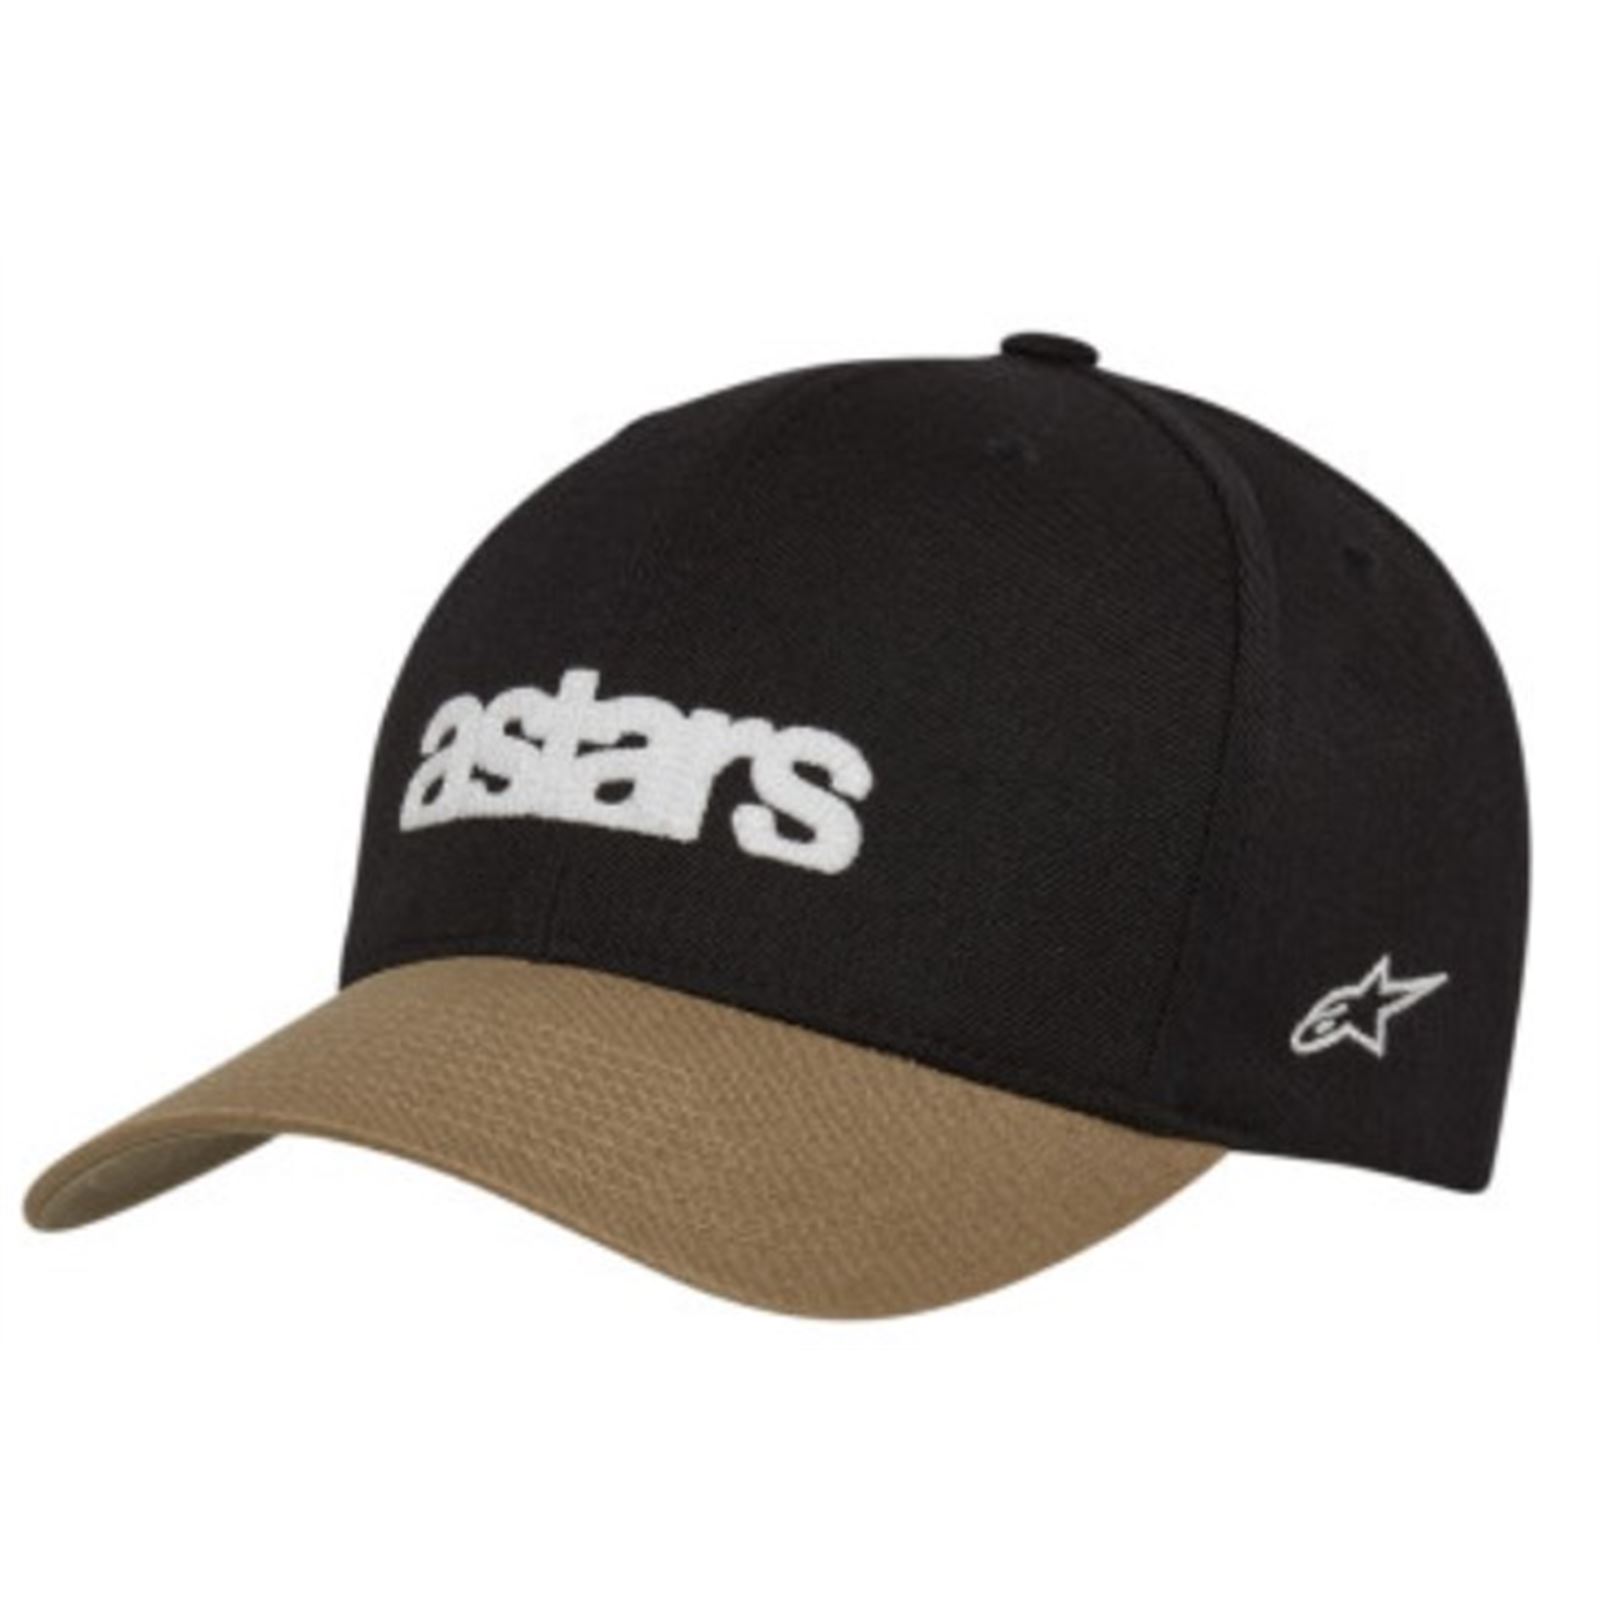 Alpinestars History Hat - Black/Sand - One Size